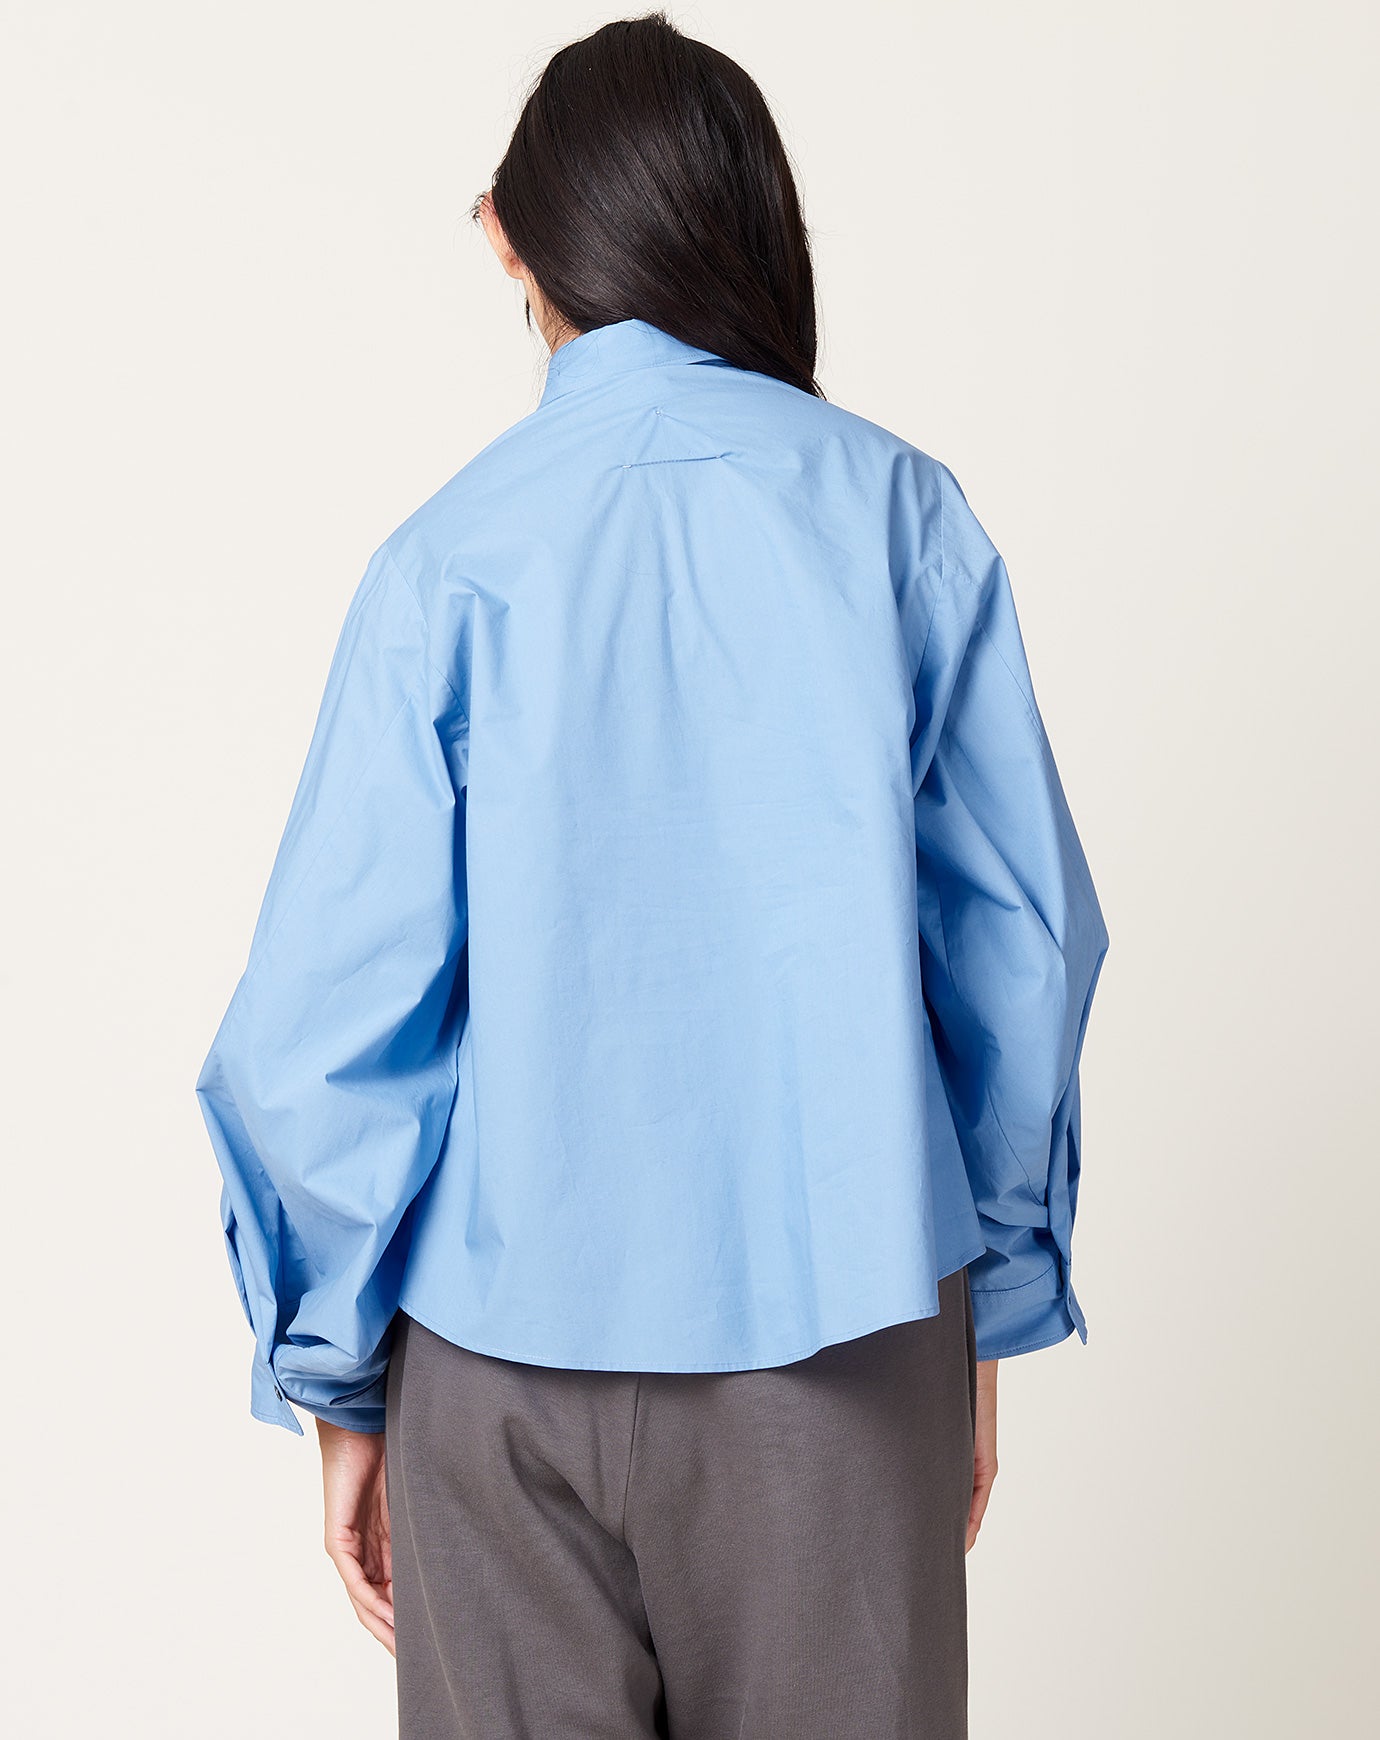 Convertible Collar Shirt in Iris Blue